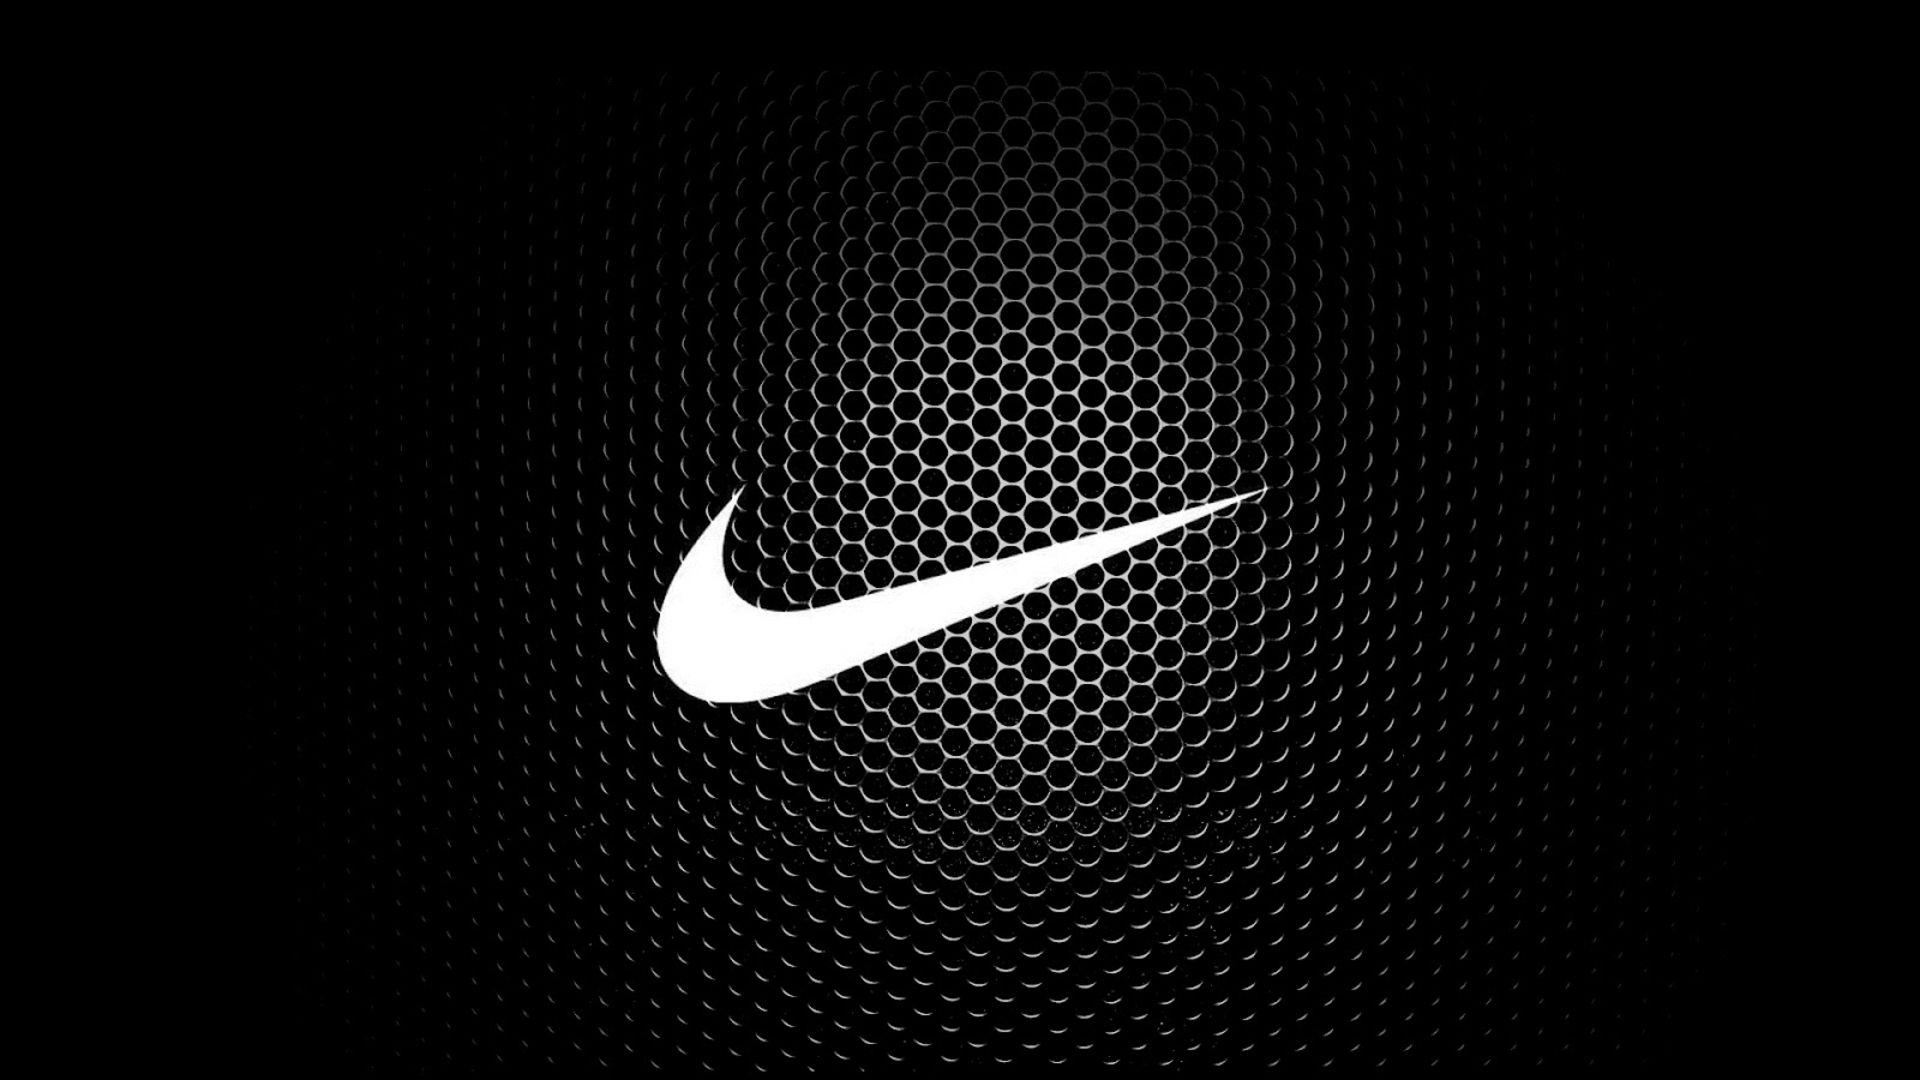 Óxido eso es todo ensillar Fondos de pantalla de Nike - FondosMil